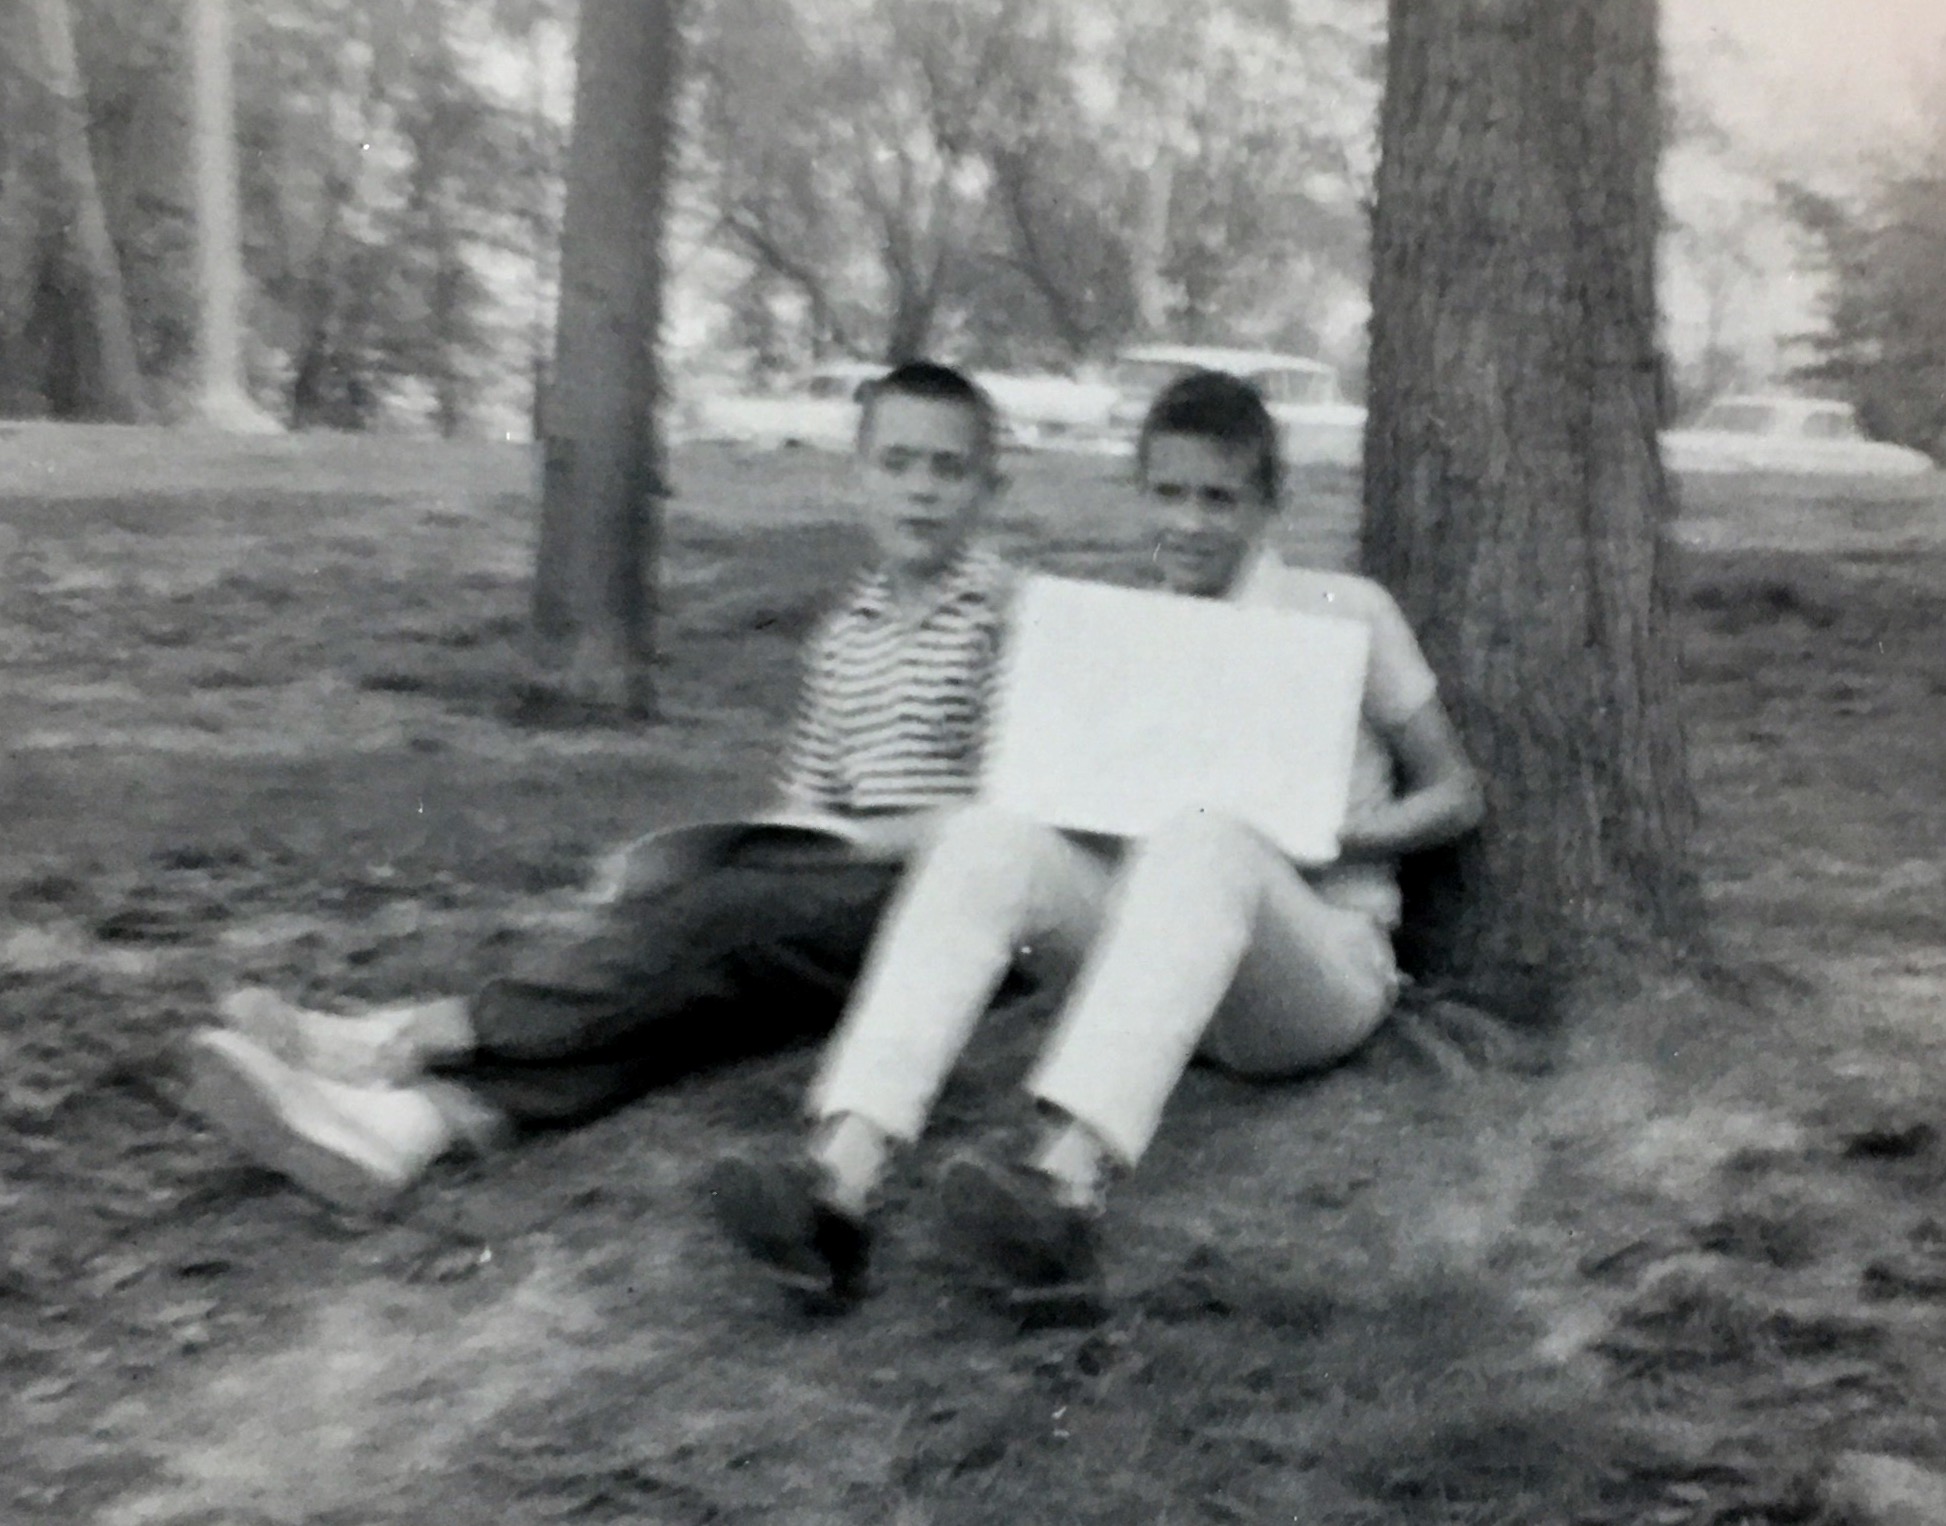 Johnny Duchek and Joe Loesch in a park in St. Louis 1958